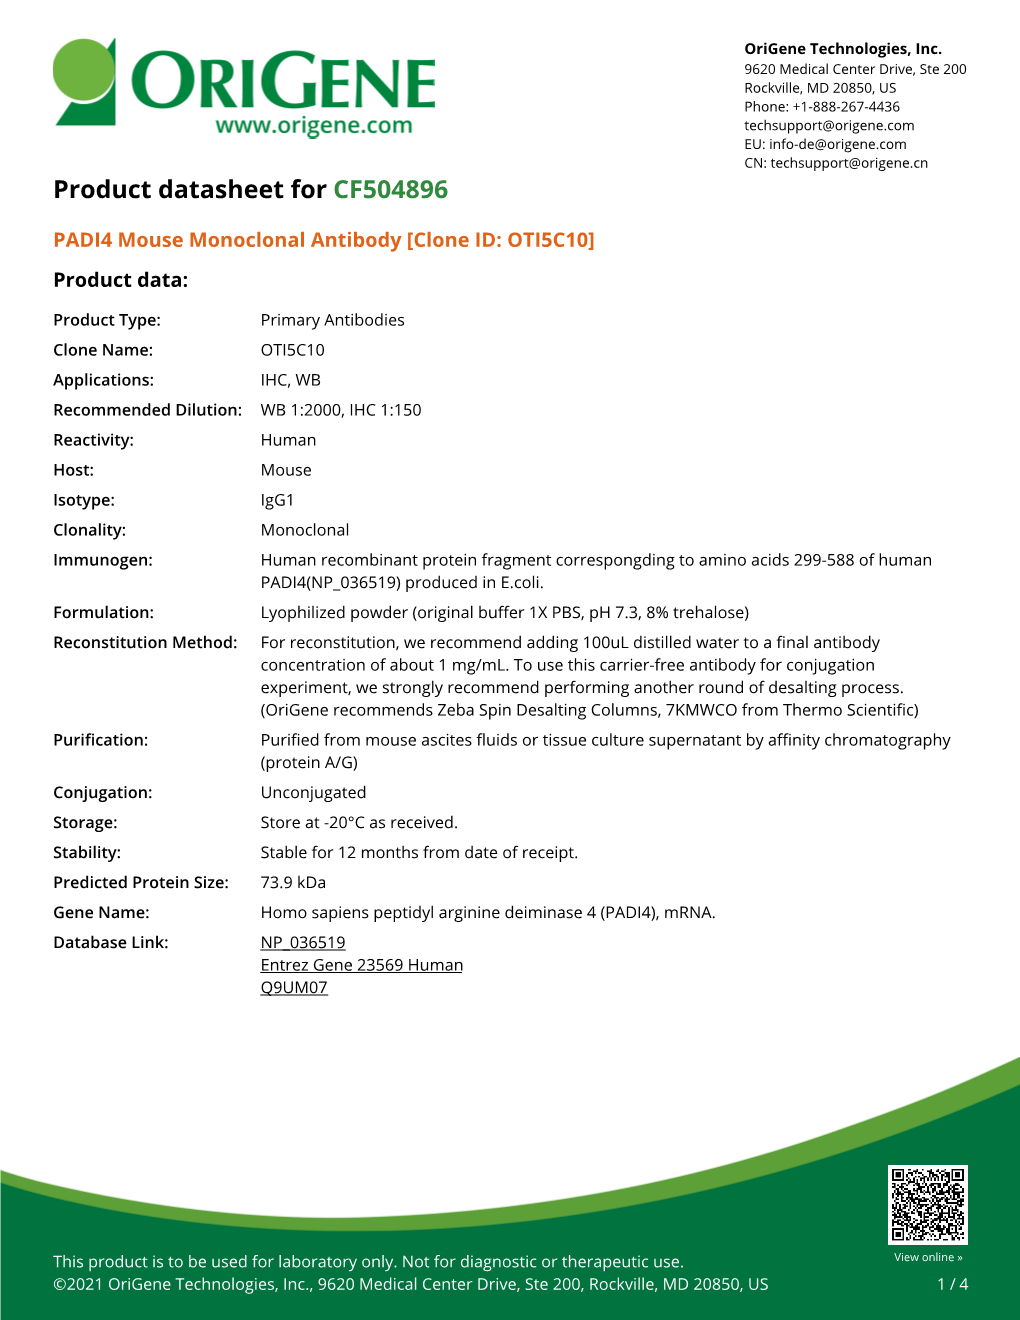 PADI4 Mouse Monoclonal Antibody [Clone ID: OTI5C10] Product Data